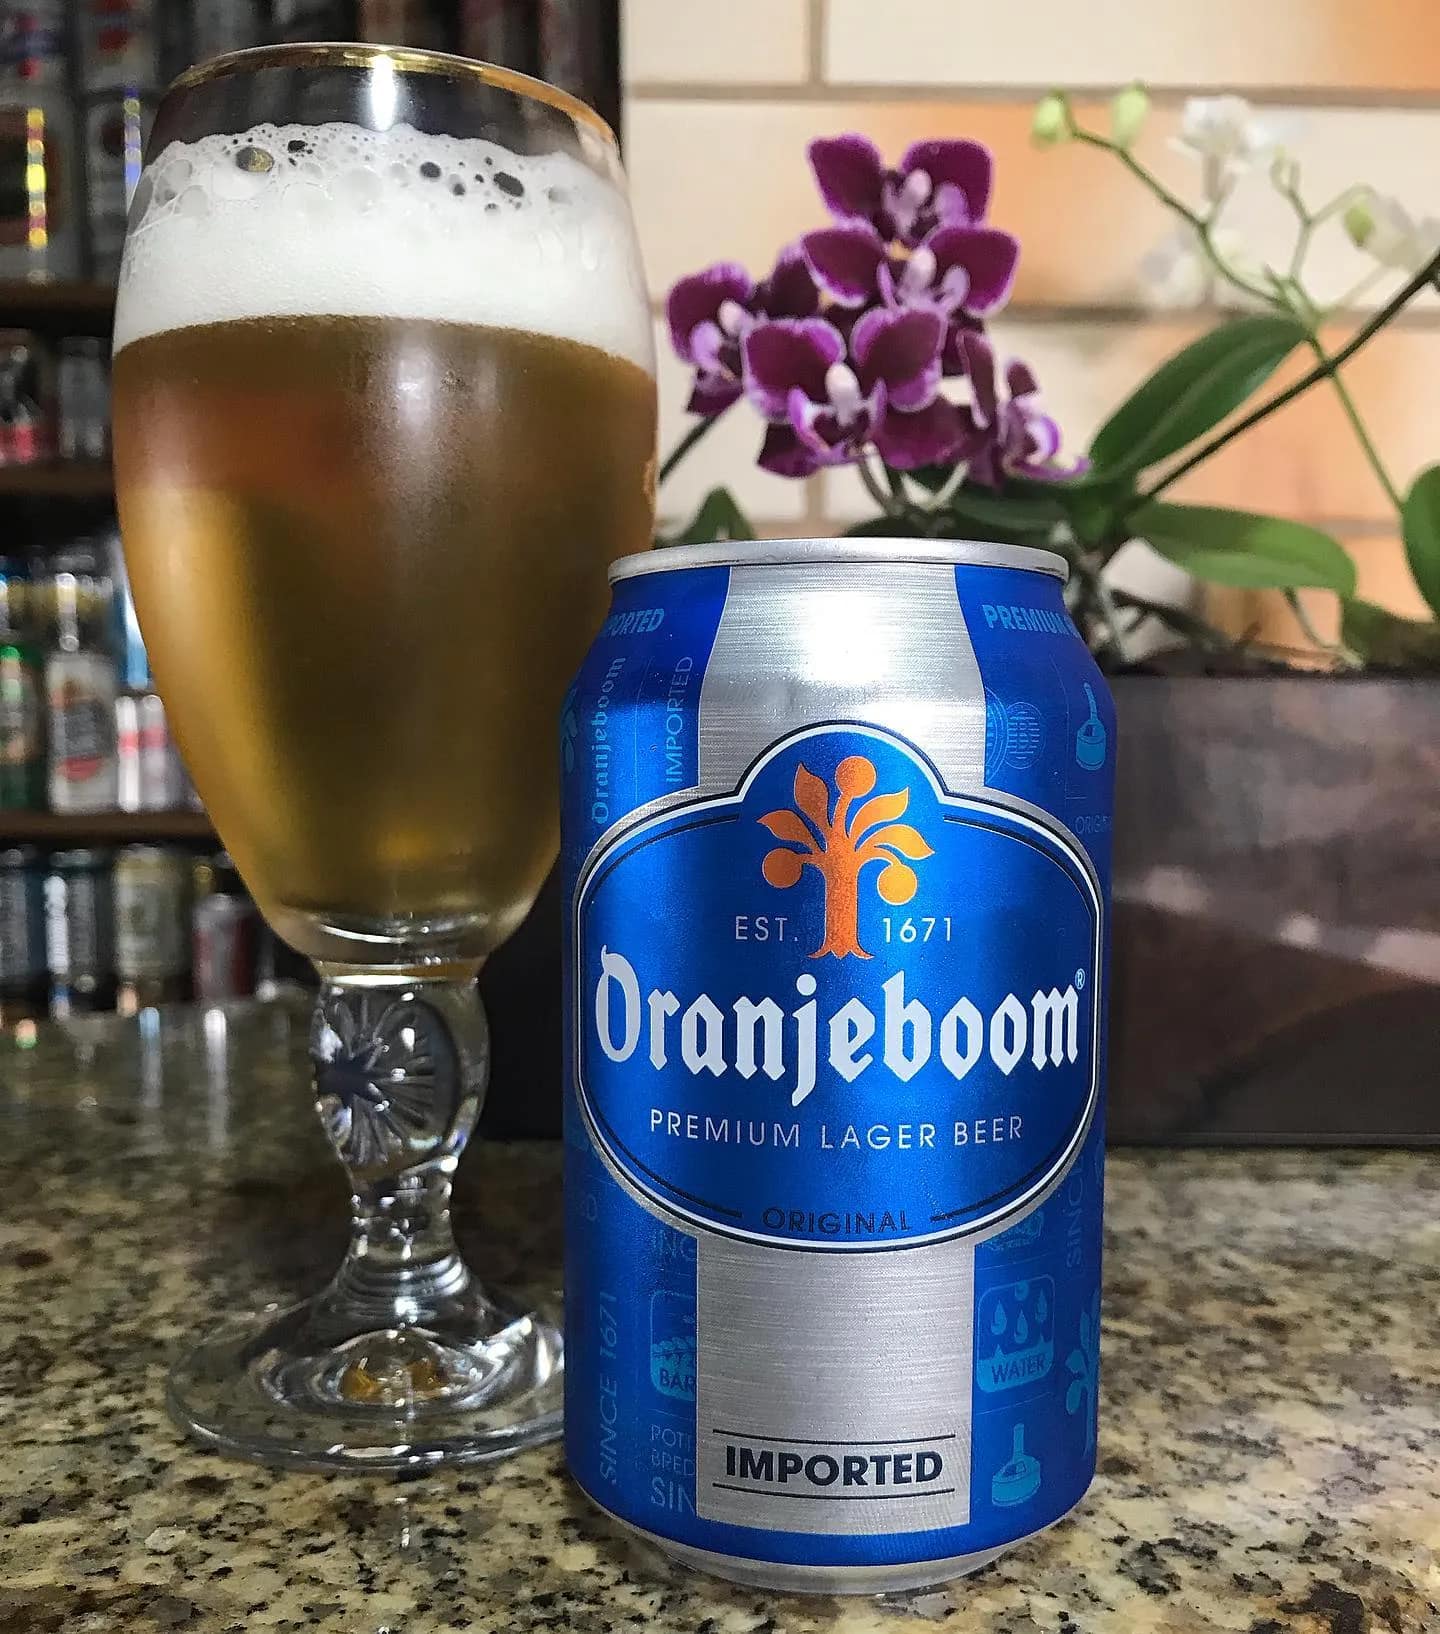 Bia Oranjeboom – lịch sử hơn 350 năm